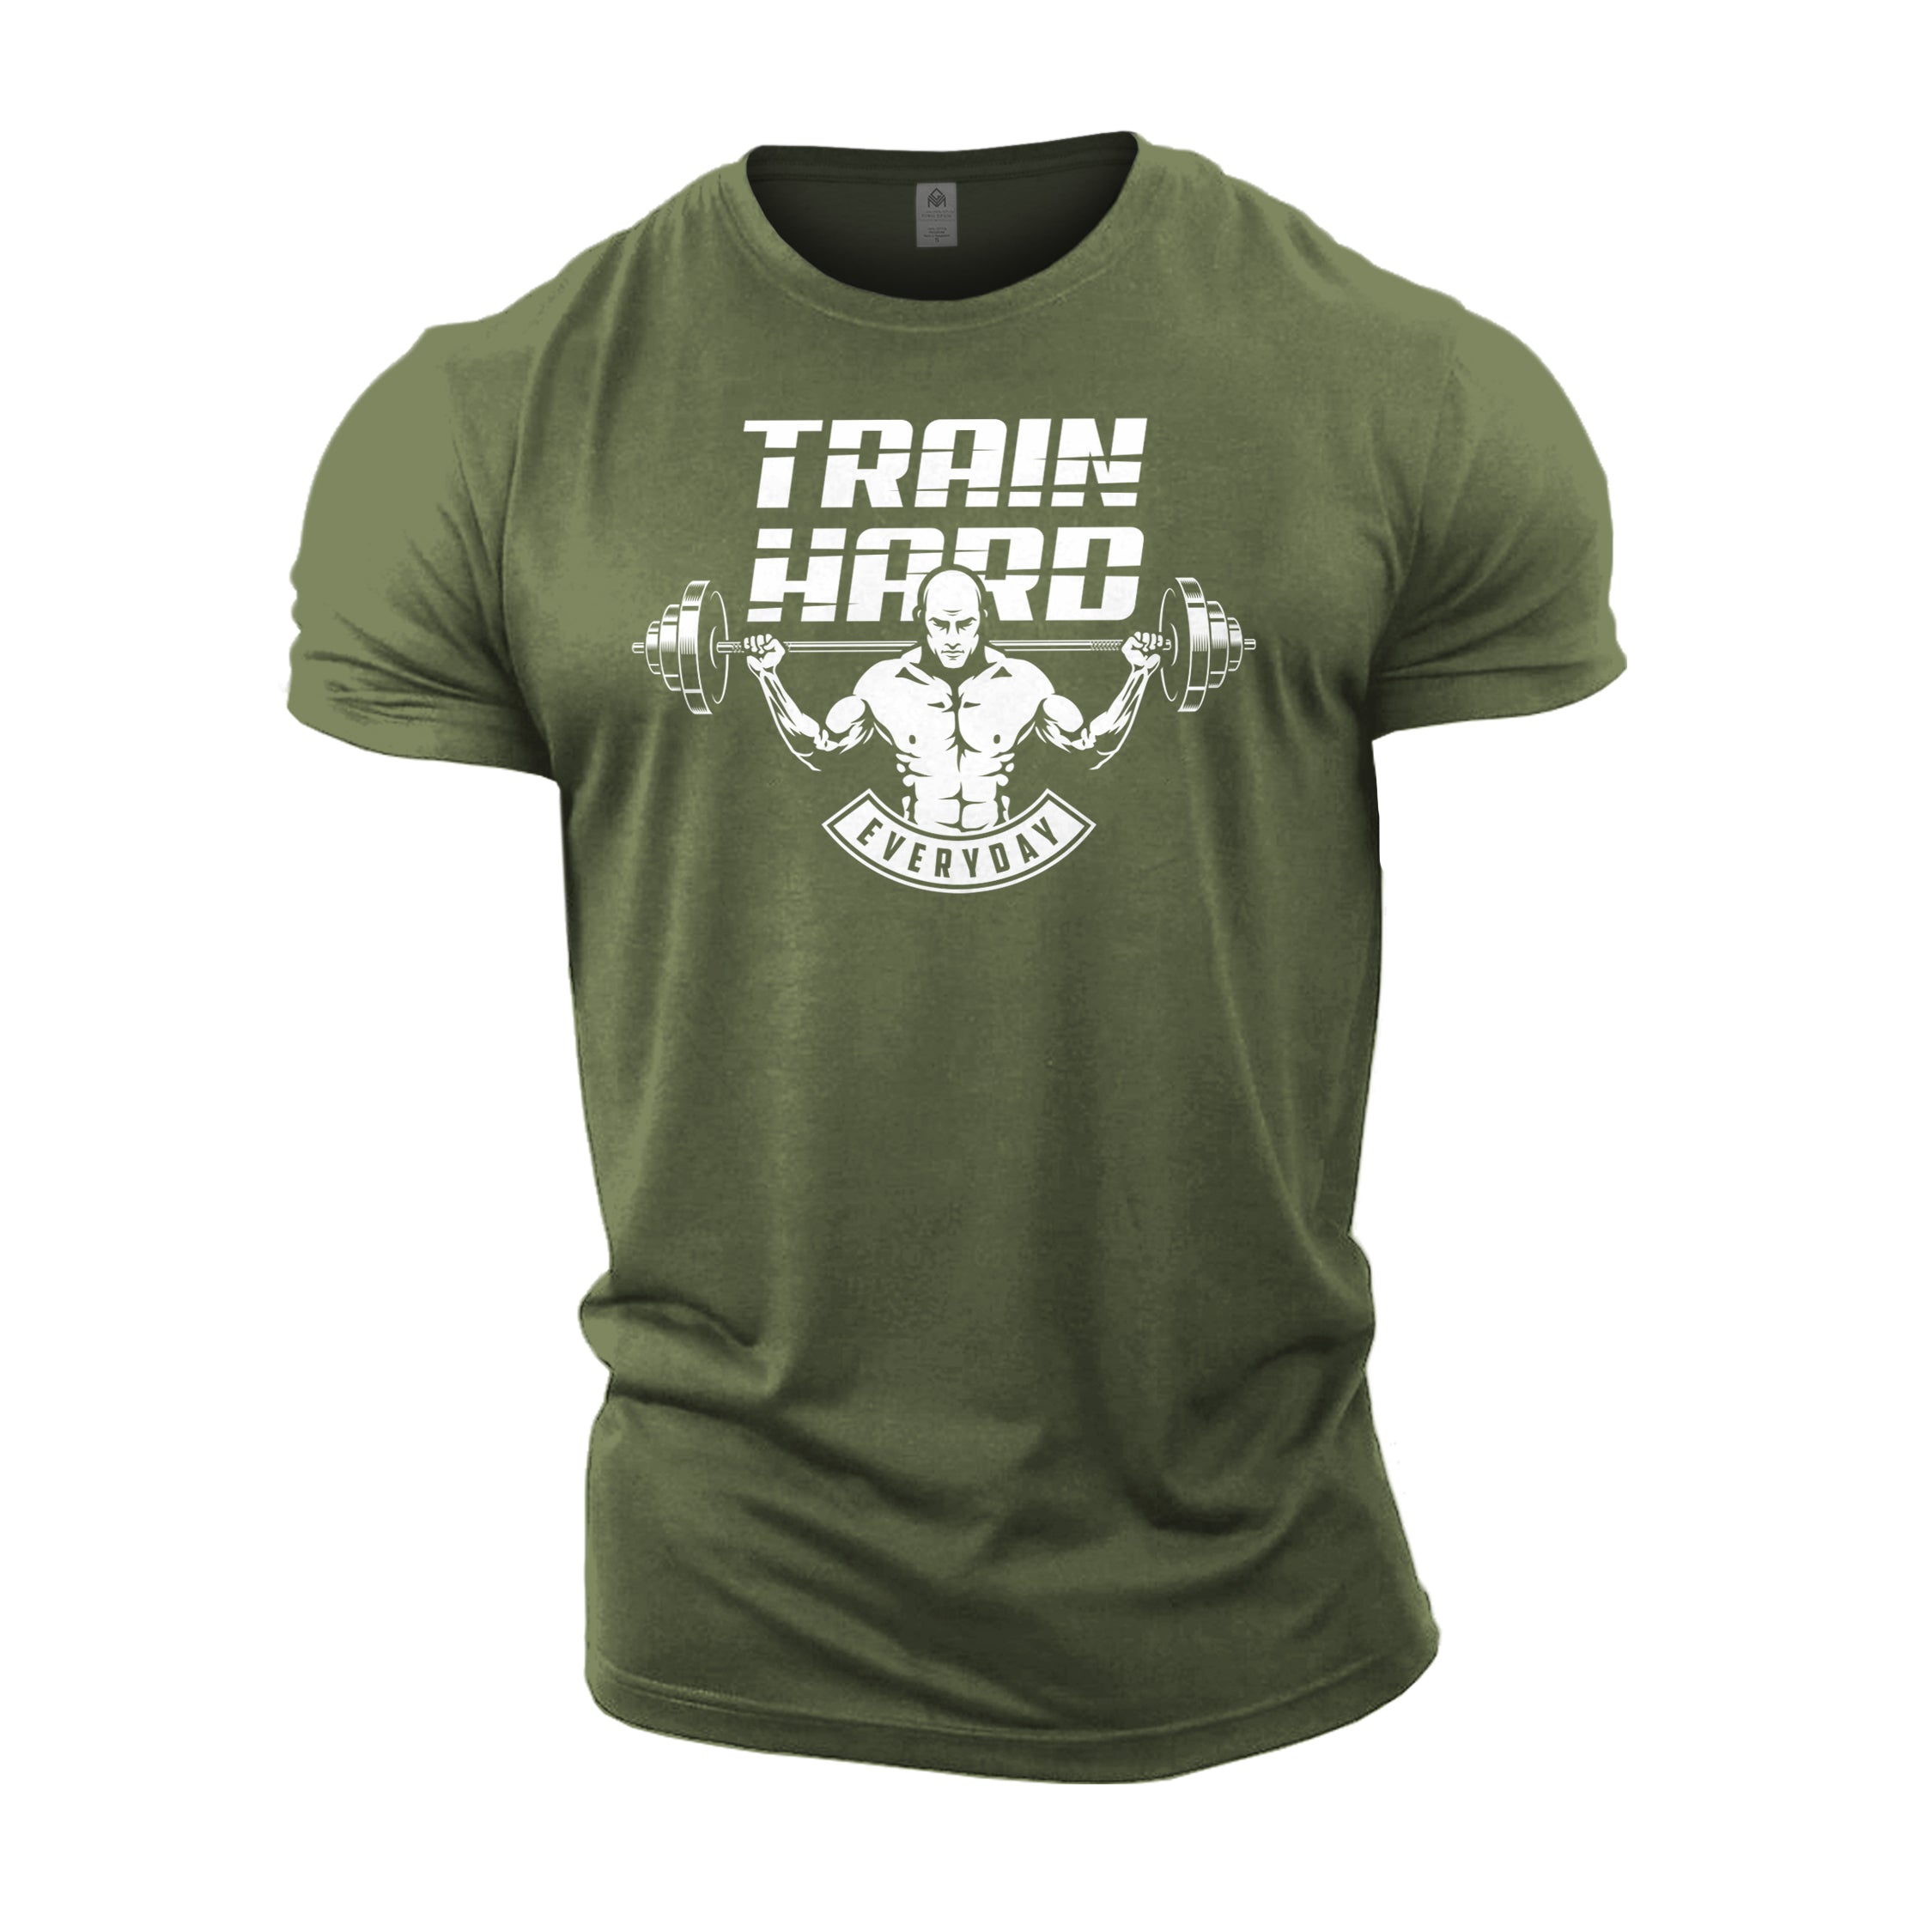 Train Hard Everyday - Gym T-Shirt